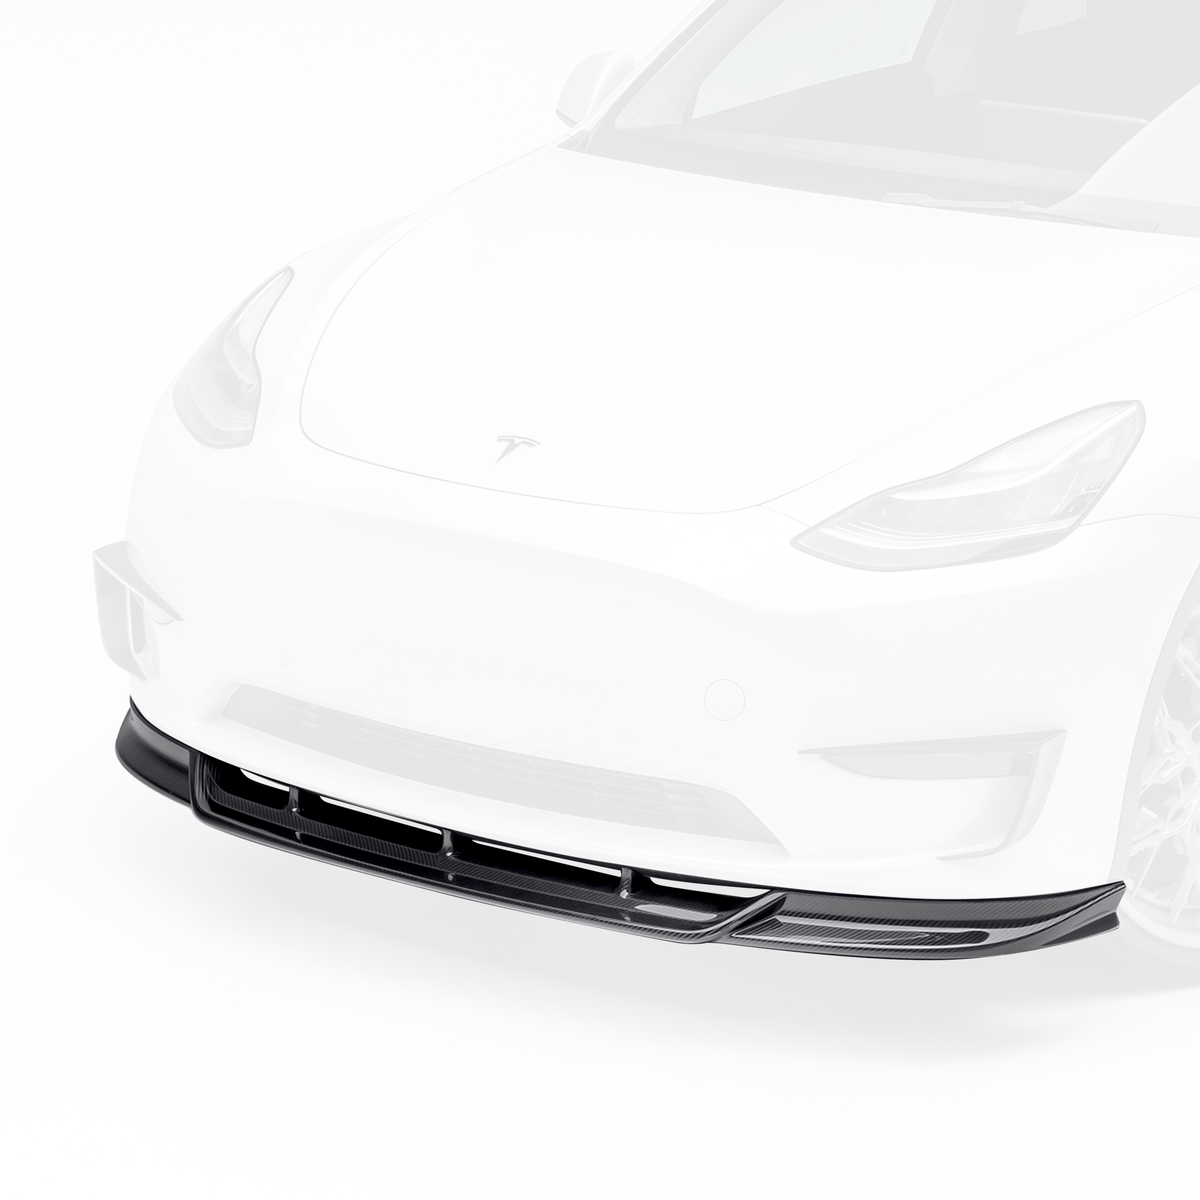 VRS Tesla Model S Plaid Aero Front Spoiler Carbon Fiber PP 2X2 Glossy